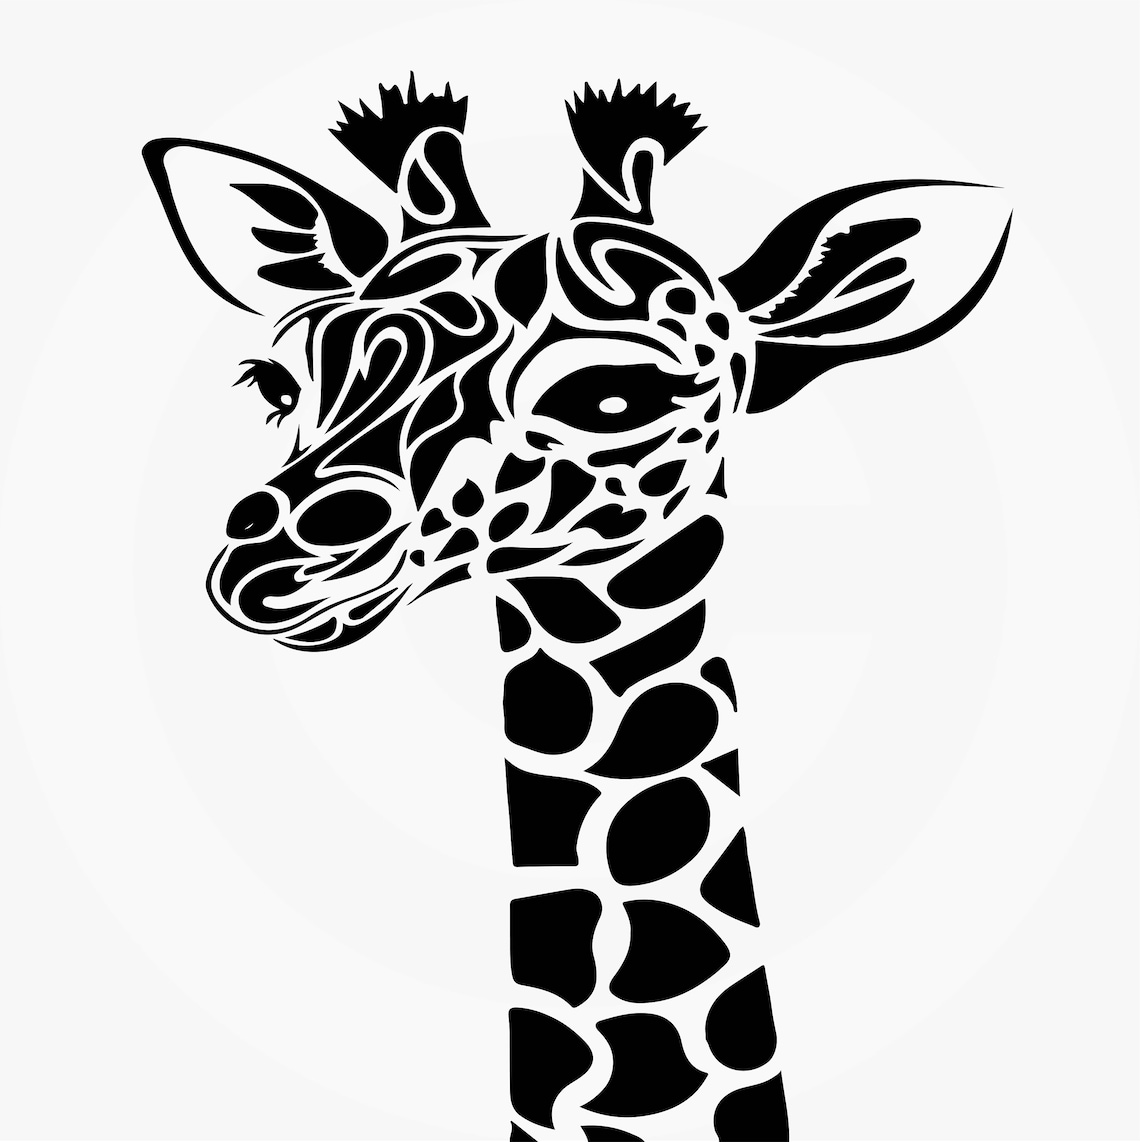 giraffe-stencil-printable-printable-world-holiday